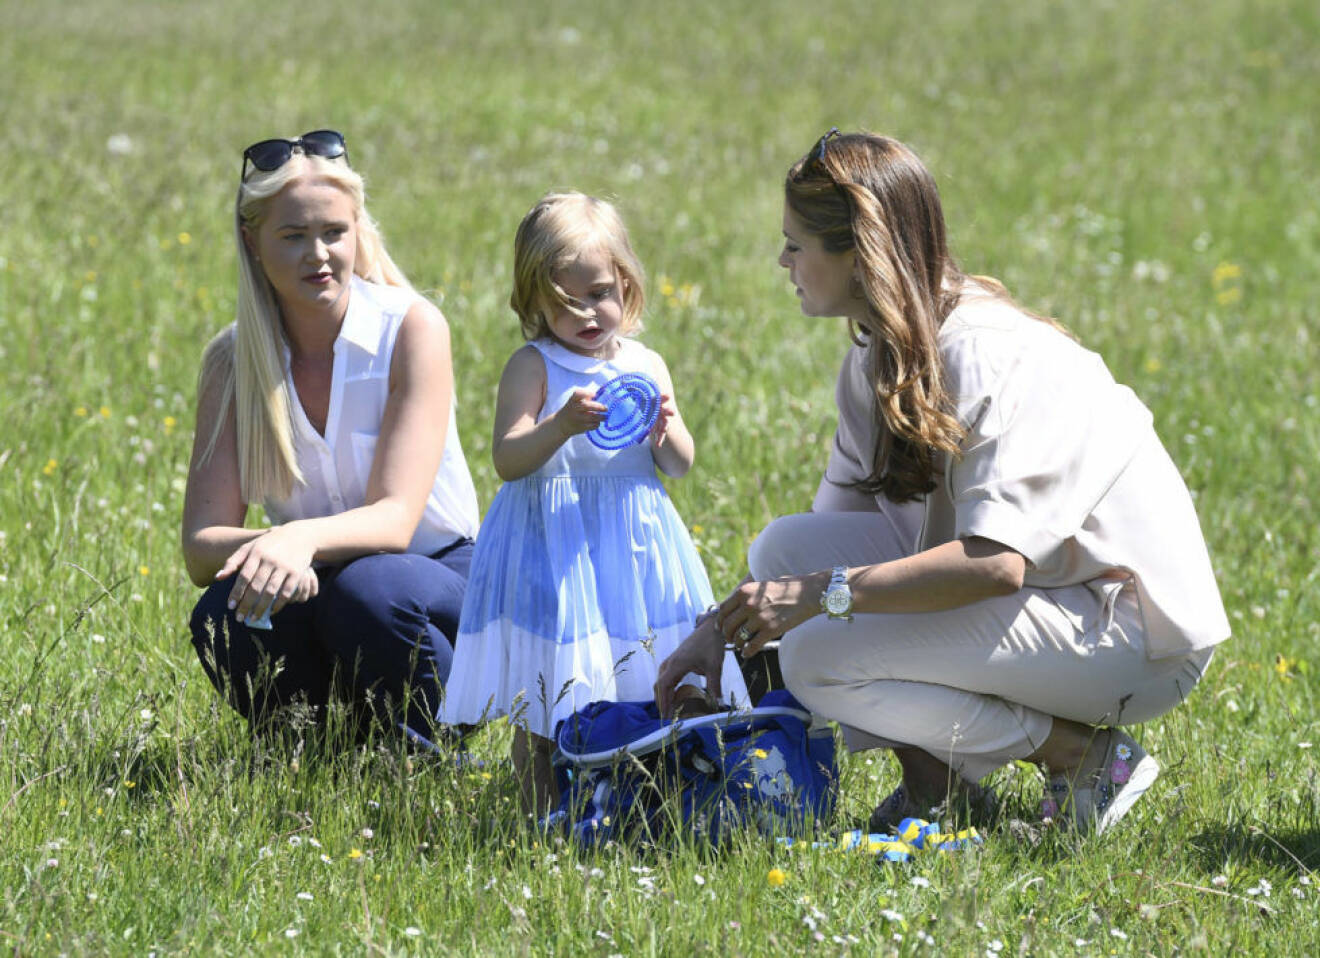 Prinsessan Madeleine och prinsessan Leonore med barnflickan Louise Blomqvist sommaren 2016.